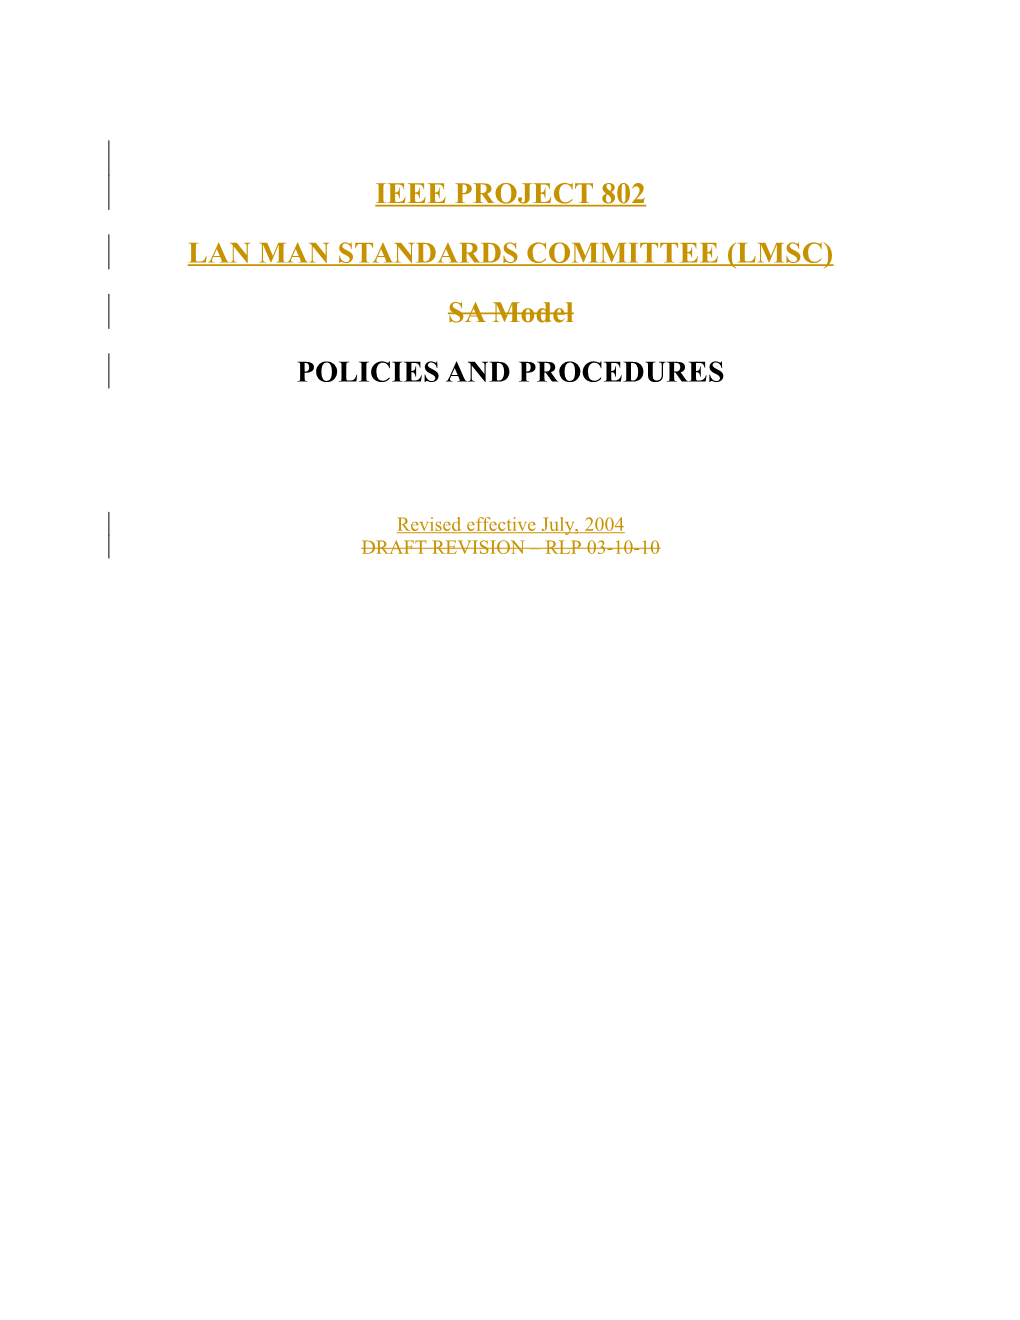 IEEE PROJECT 802 LAN MAN STANDARDS COMMITTEE (LMSC) POLICIES and PROCEDURES, Revised Effective s1